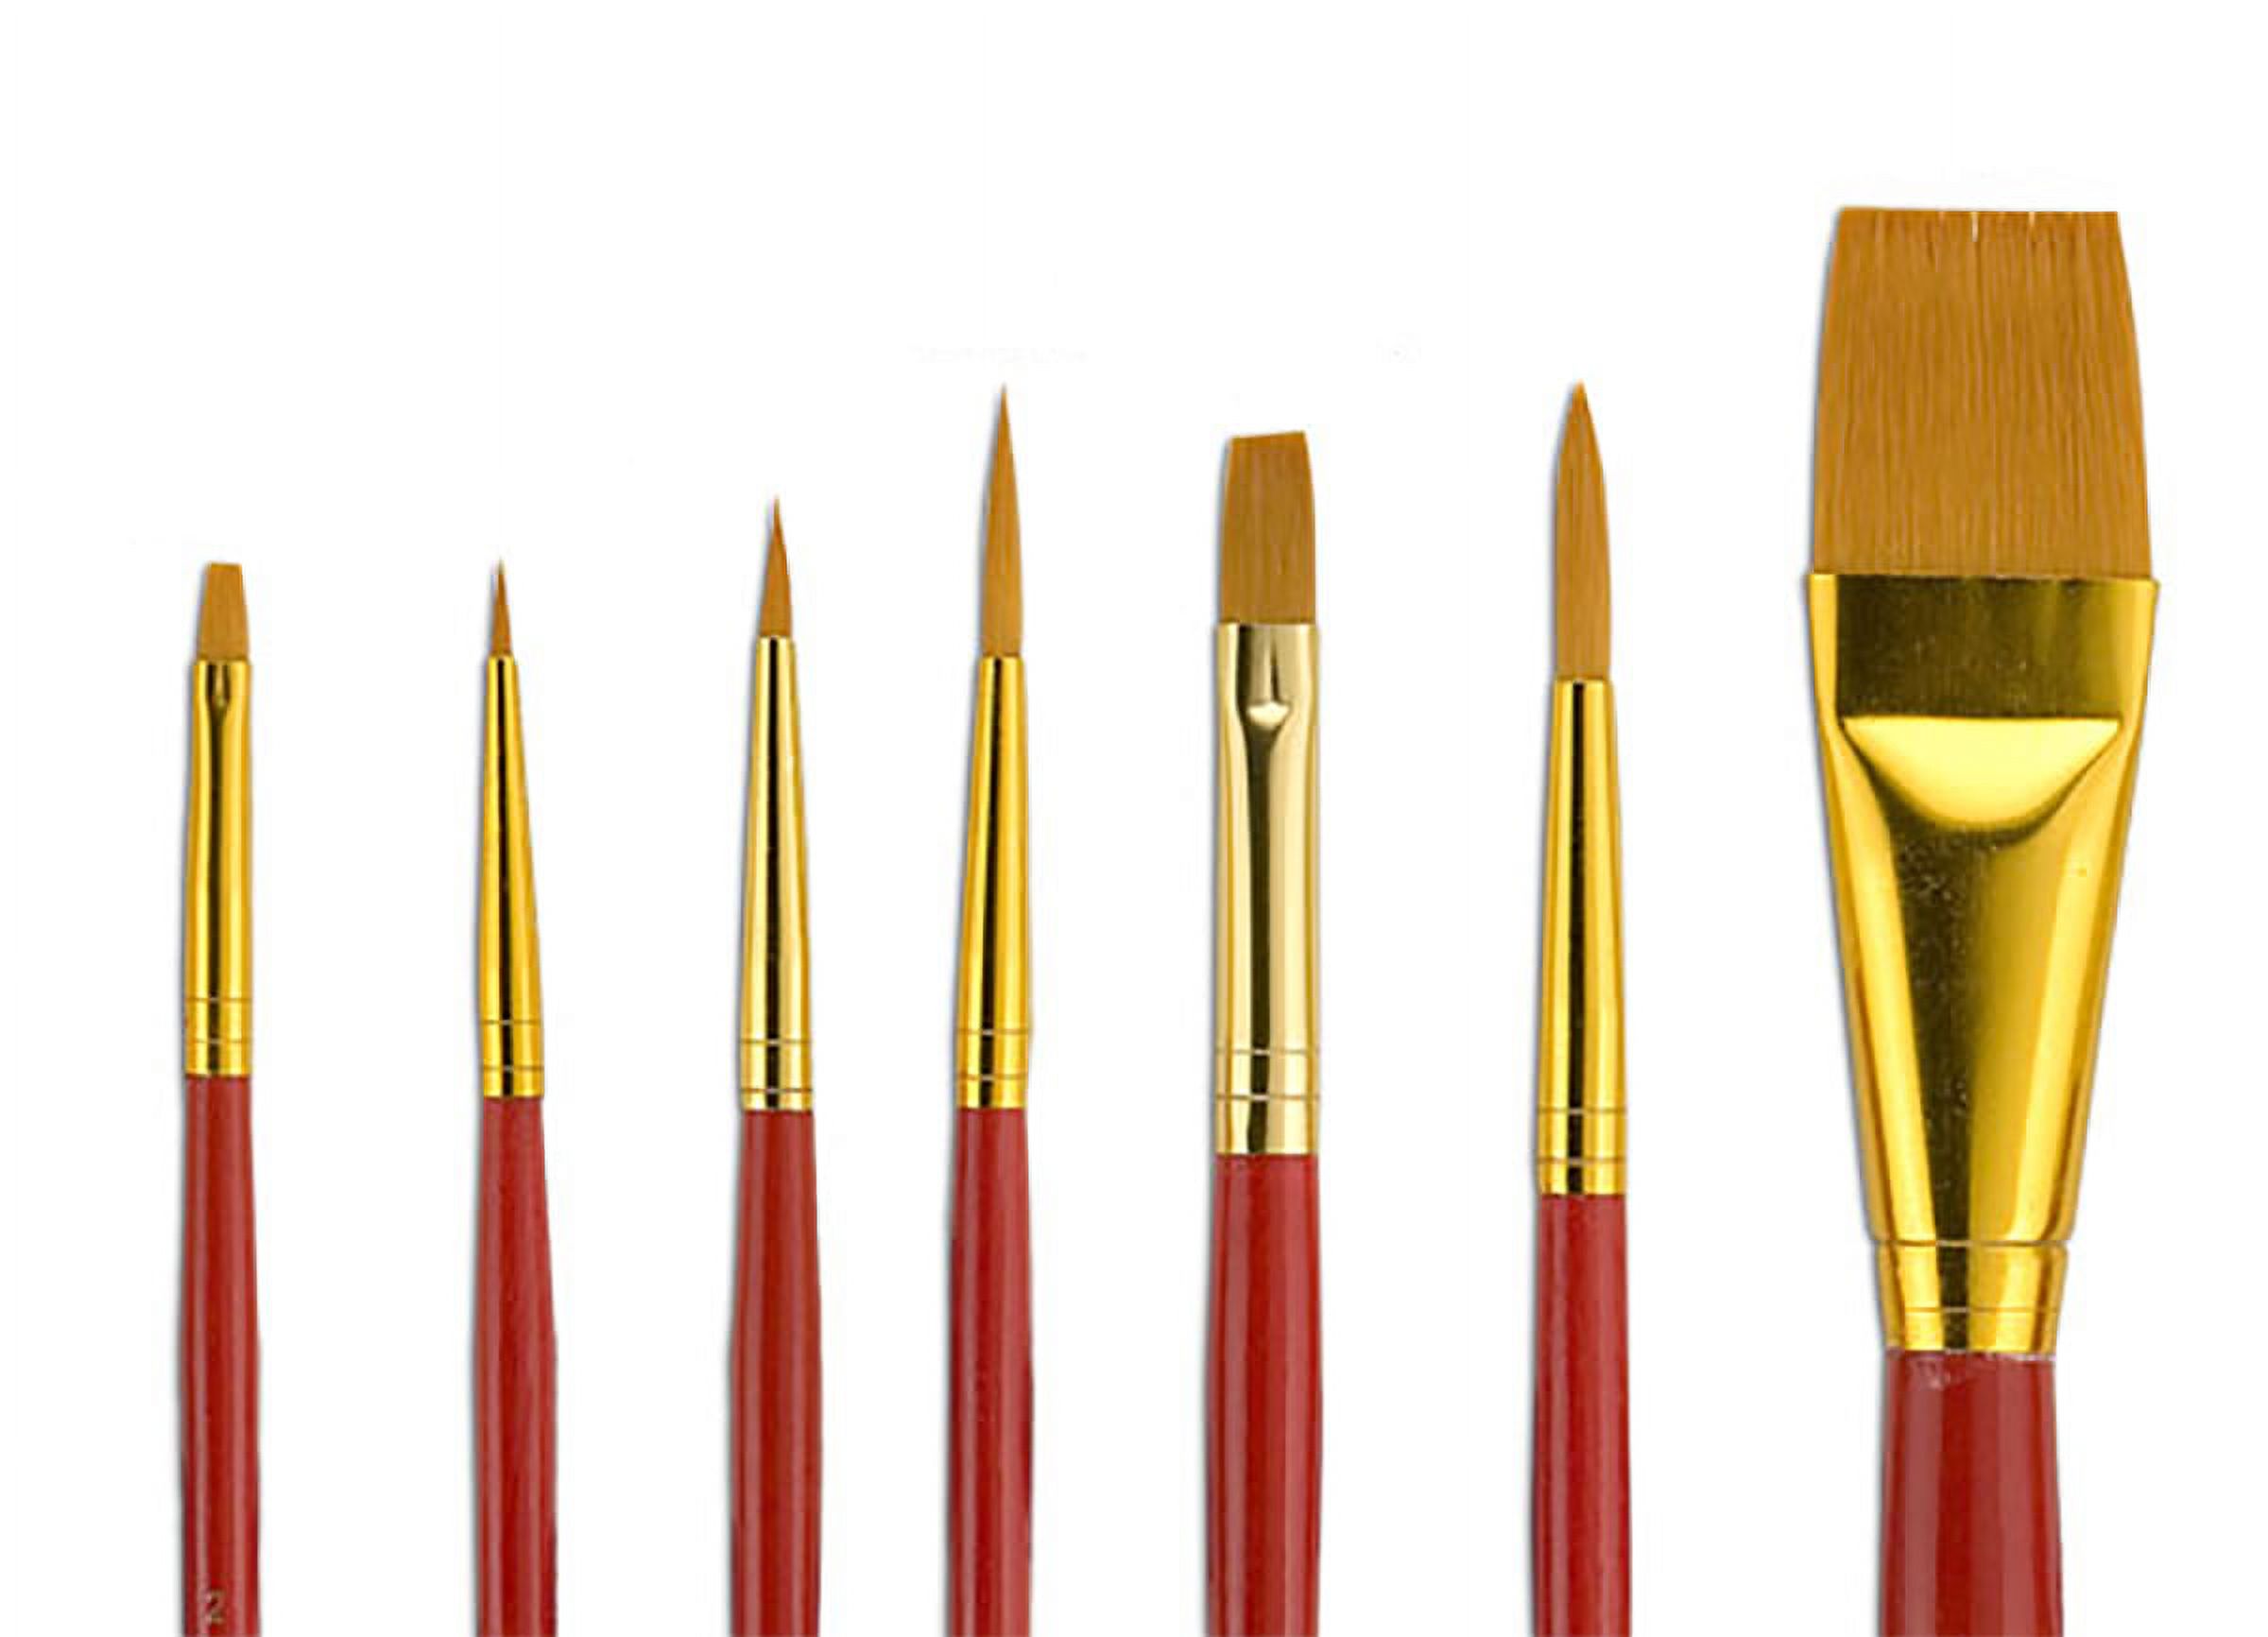 Fundamentals Paint Brush Set Short Handled For Decorative Arts, Watercolor,  Acrylic, Oils, Set Of 7 Classic Golden Watercolor Paint Brushes - Set No.  15 